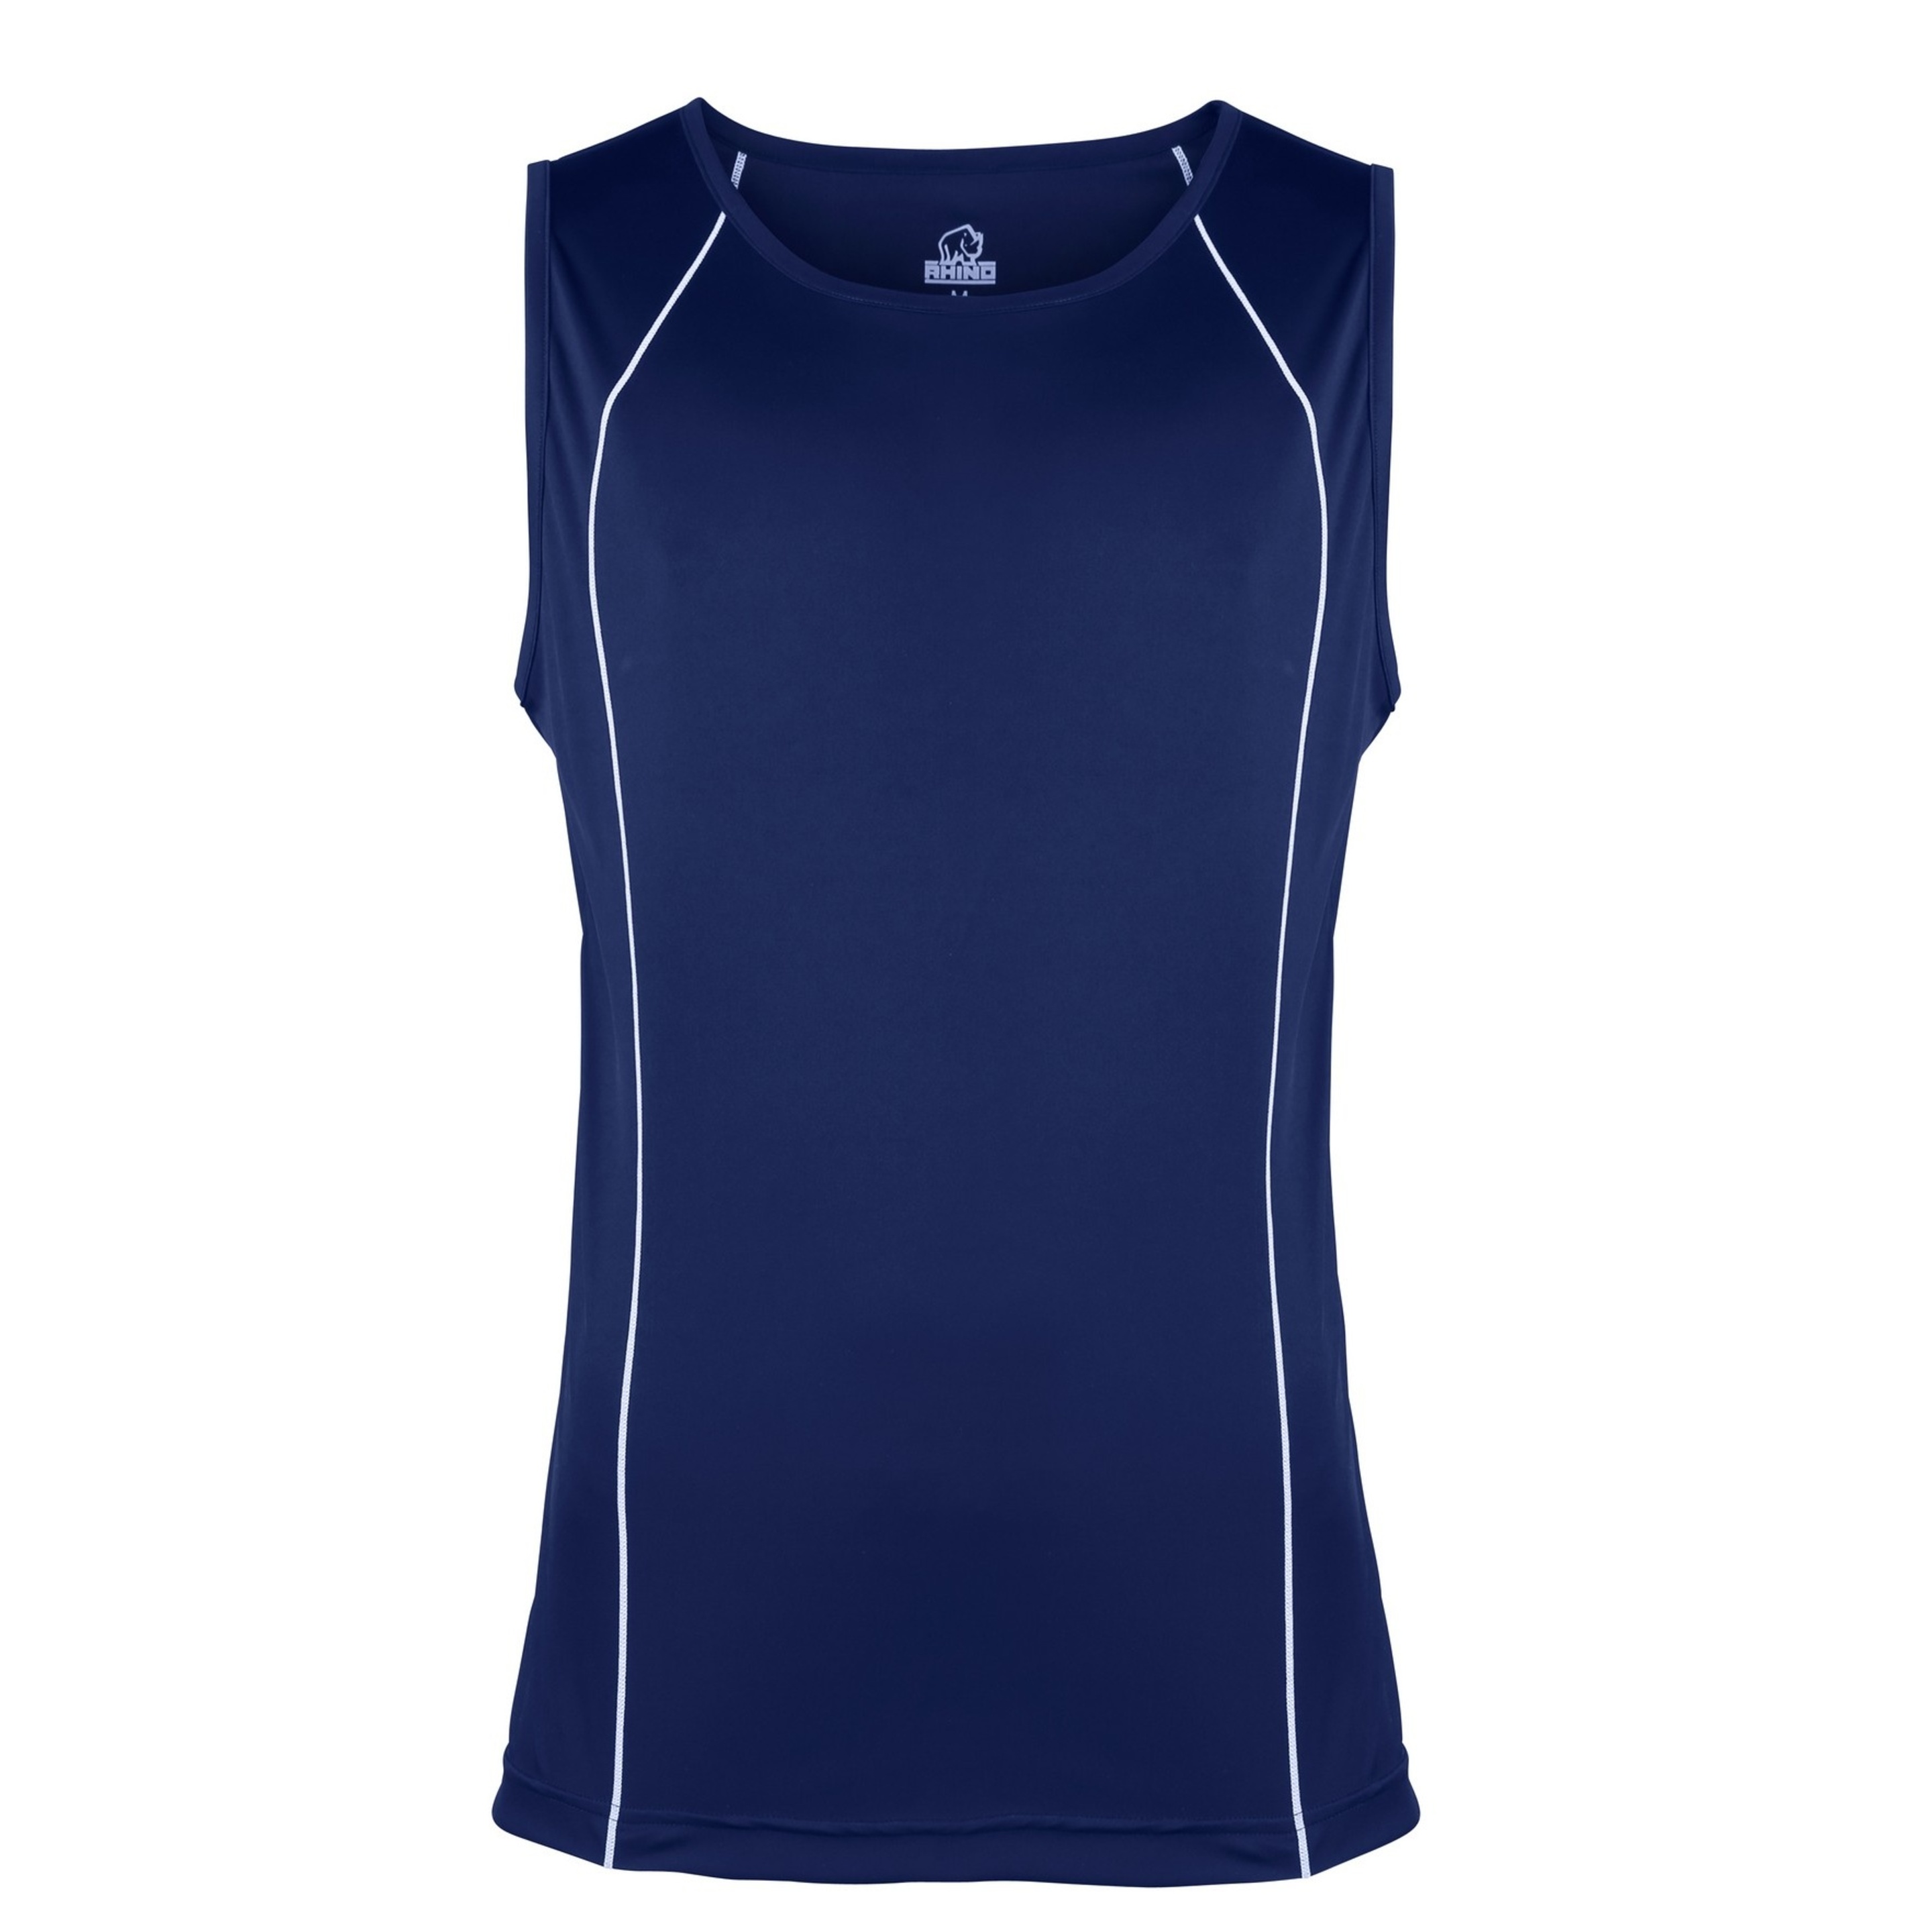 Rhino - Camiseta De Deporte Transpirable Sin Mangas Hombre Caballero - Rugby/running/gym (Azul